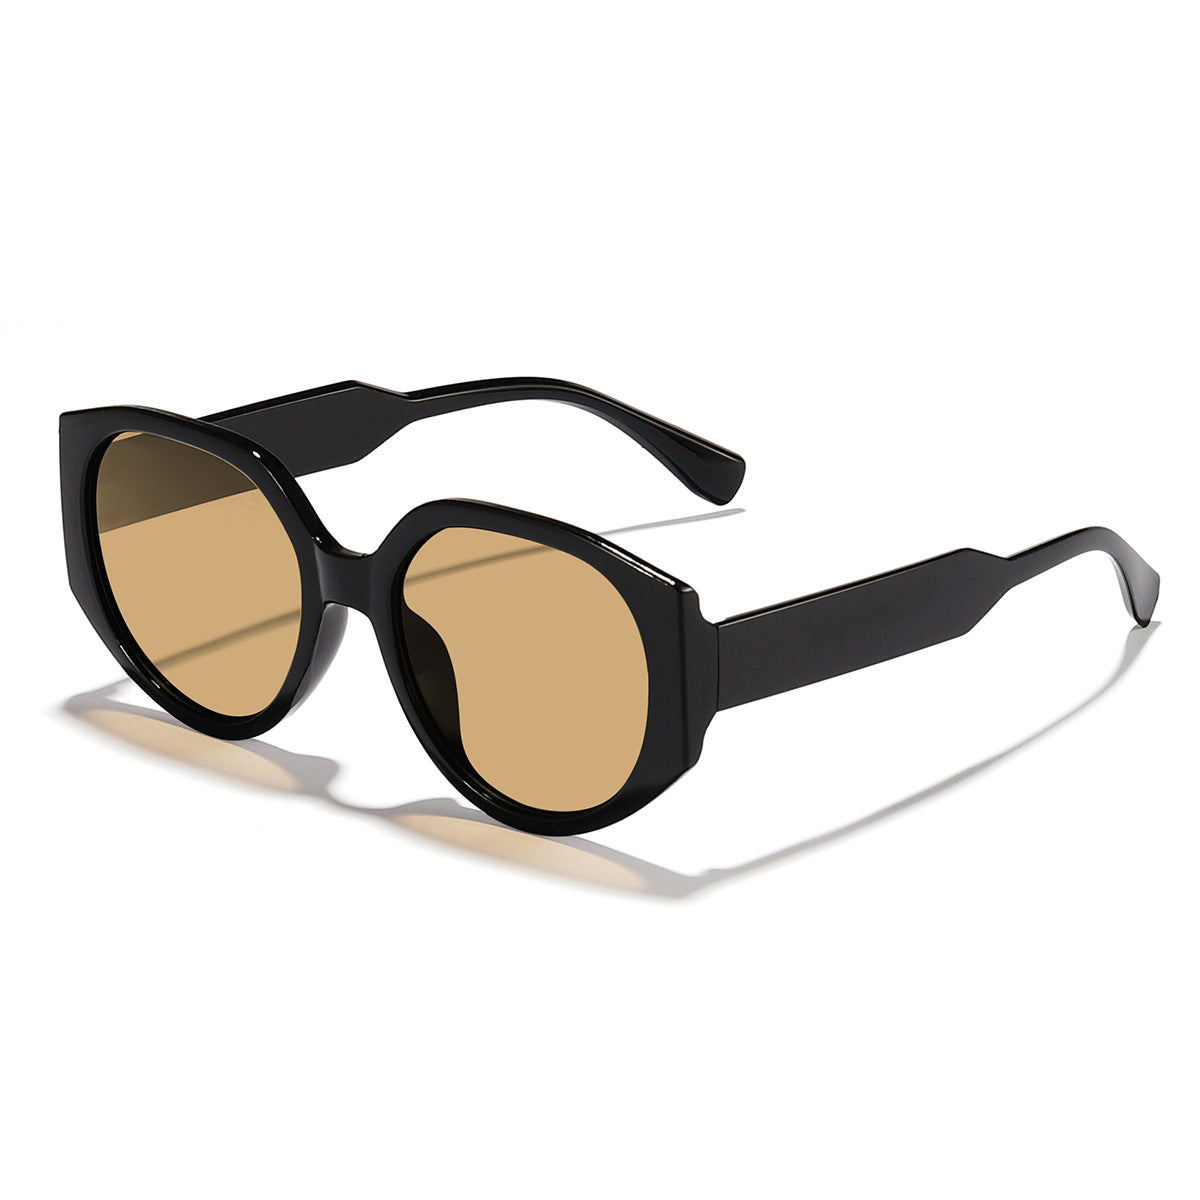 Sun-resistant Sunglasses Outdoor Wear Essential